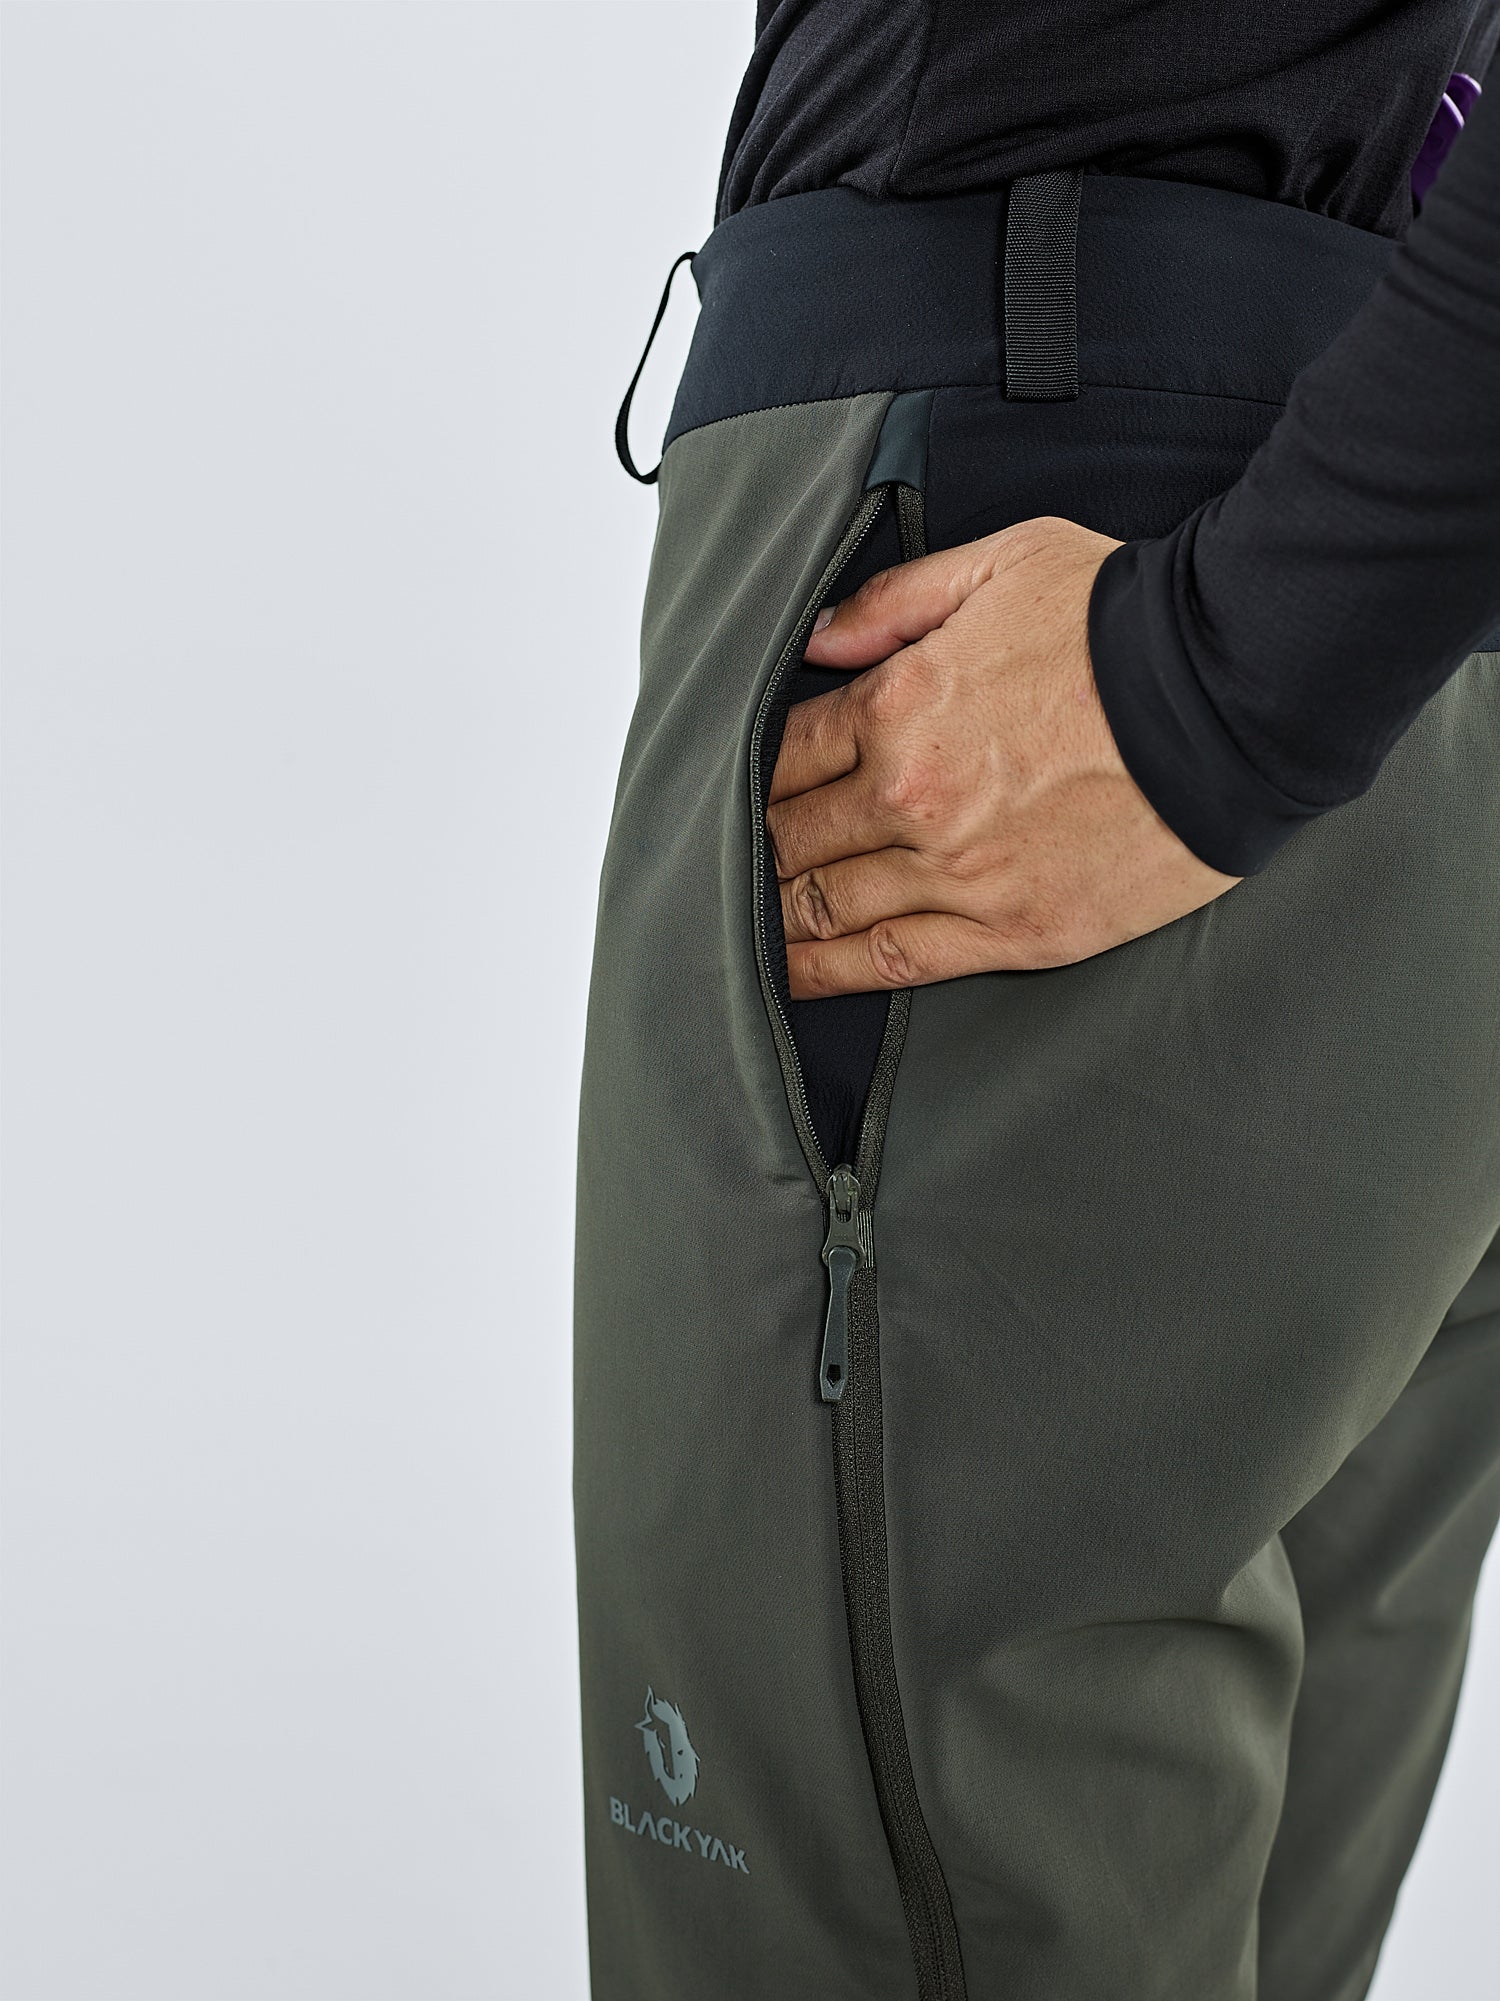 Black Yak Kuri Pants - Ski trousers Men's | Product Review | Bergfreunde.eu